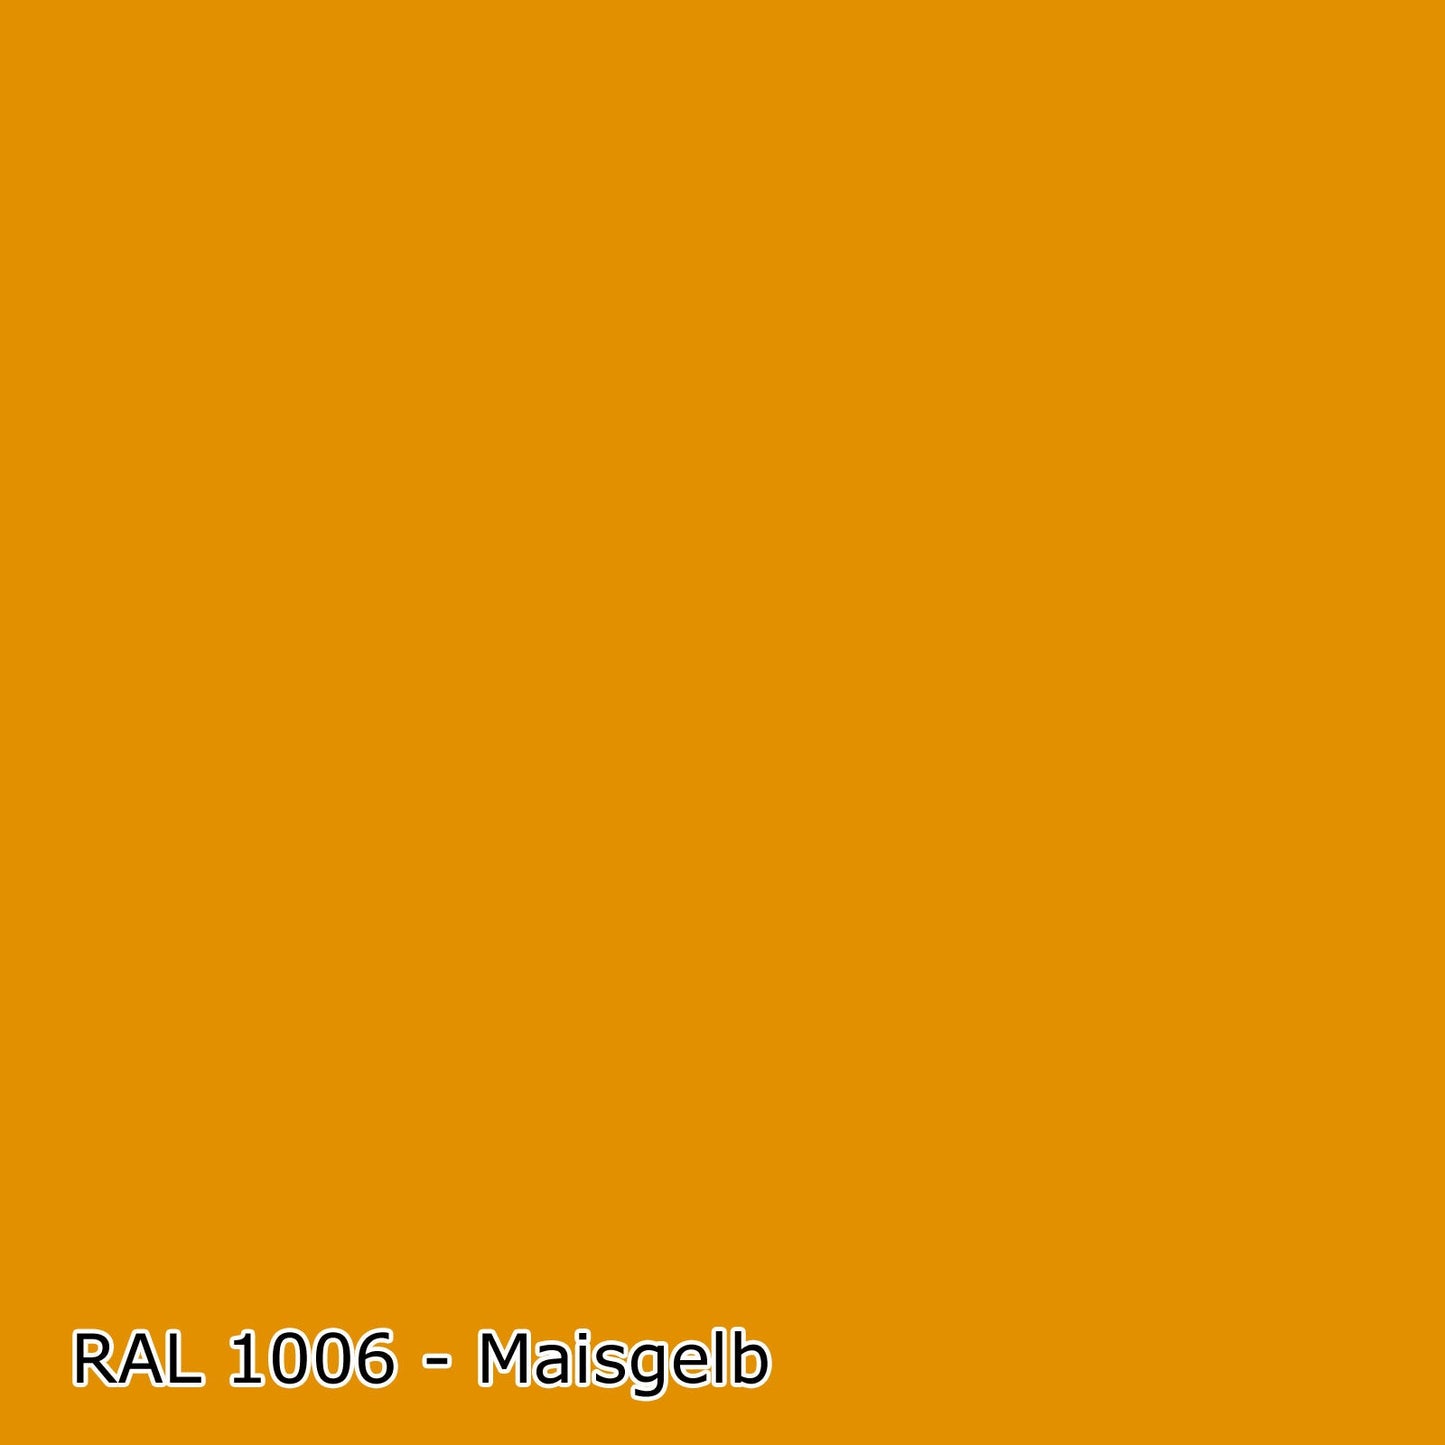 10 L Wetterschutzfarbe, Holzfarbe, Holzlack, RAL Farbwahl - MATT (RAL 1000 - 6007)